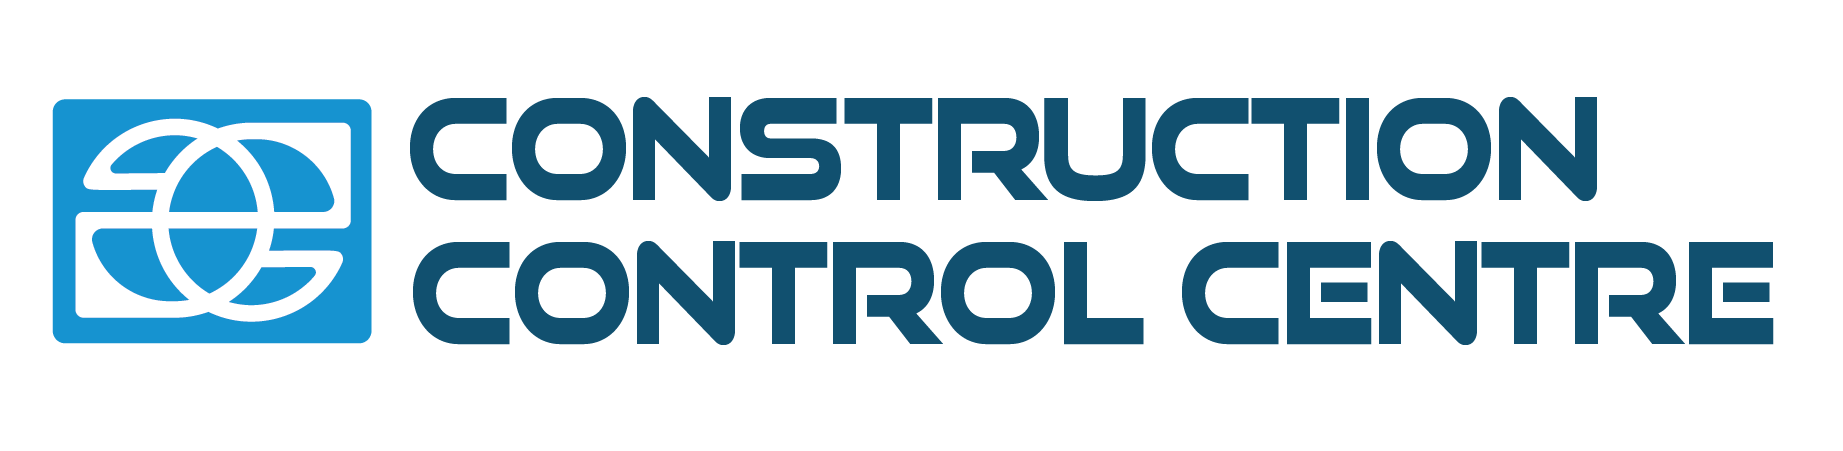 construction control centre logo white